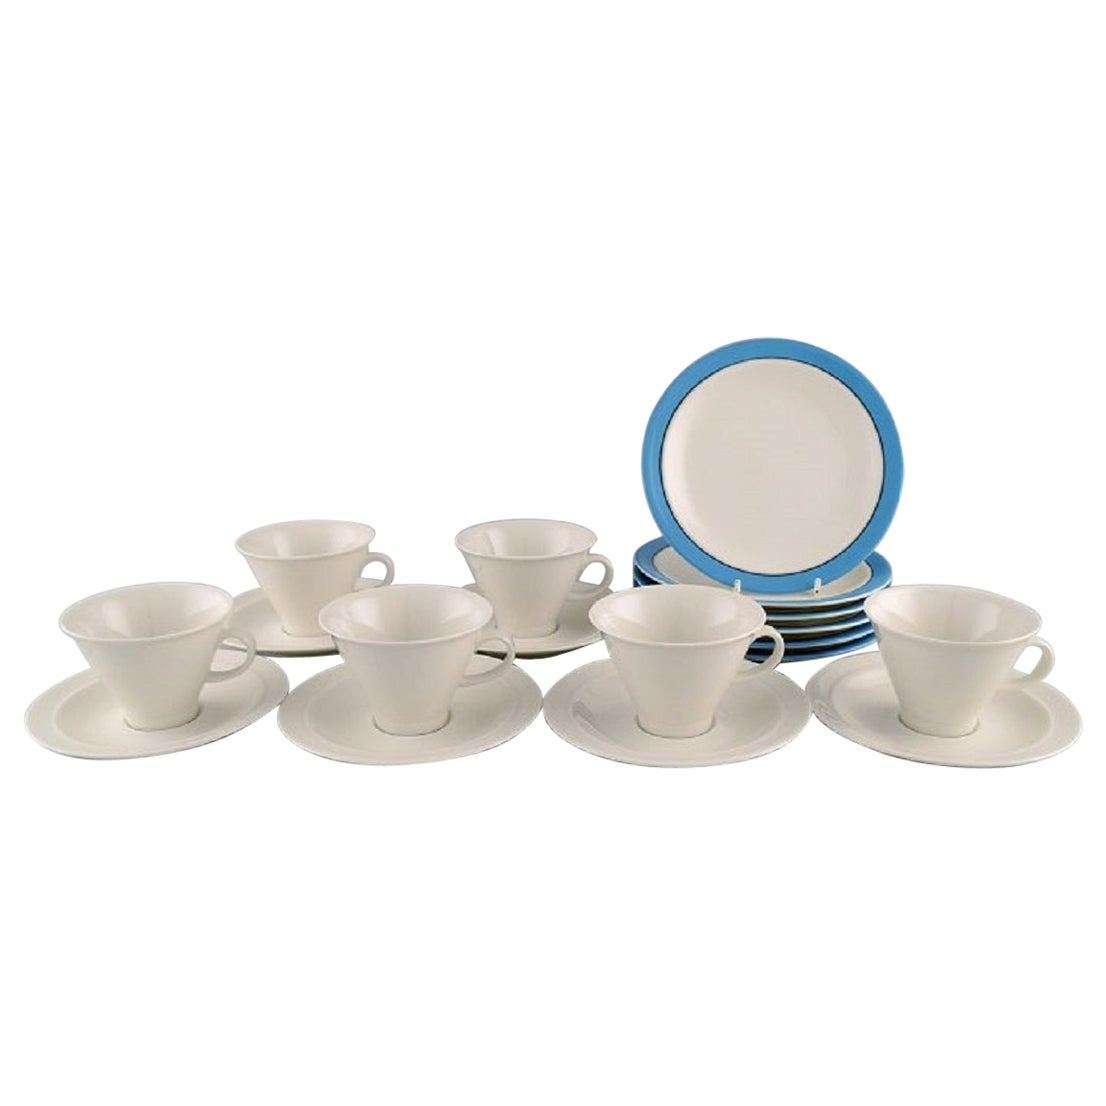 Inkeri Leivo for Arabia, Harlequin Porcelain Coffee Service